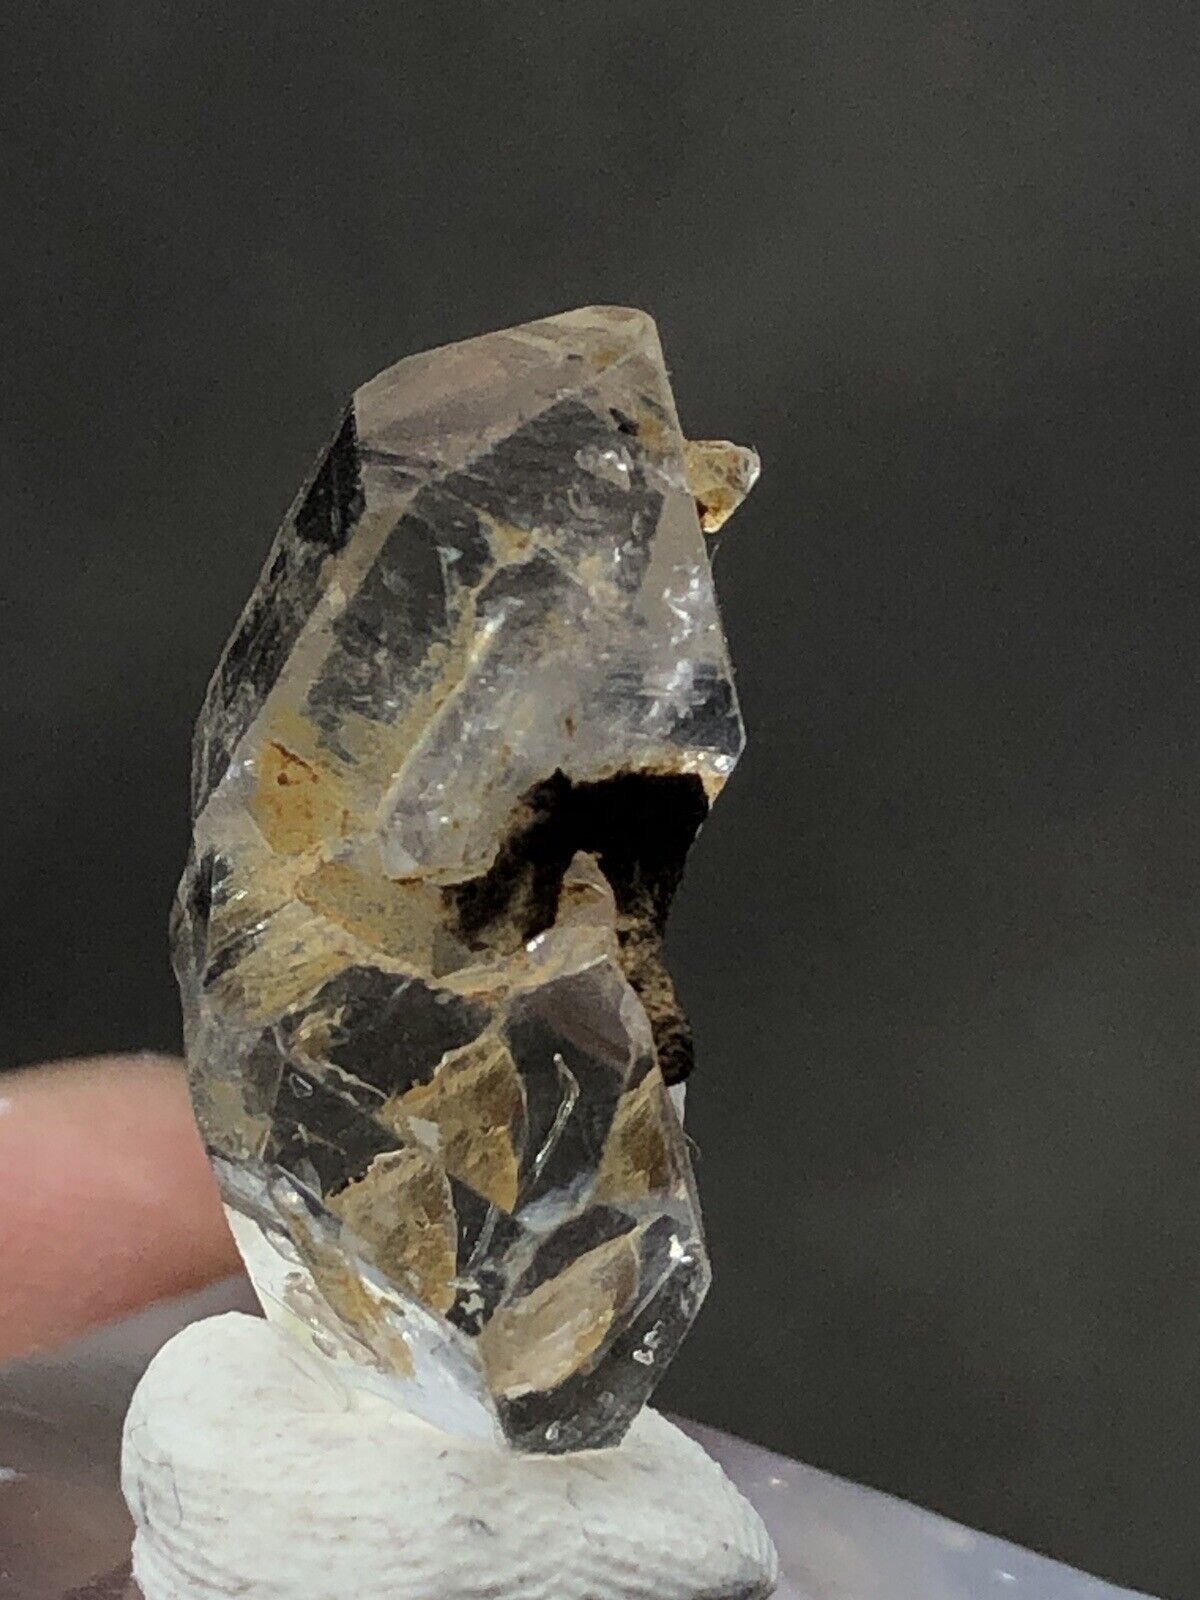 Raw Unique Inclusion Window Quartz Crystal, 17 Carat From Pakistan